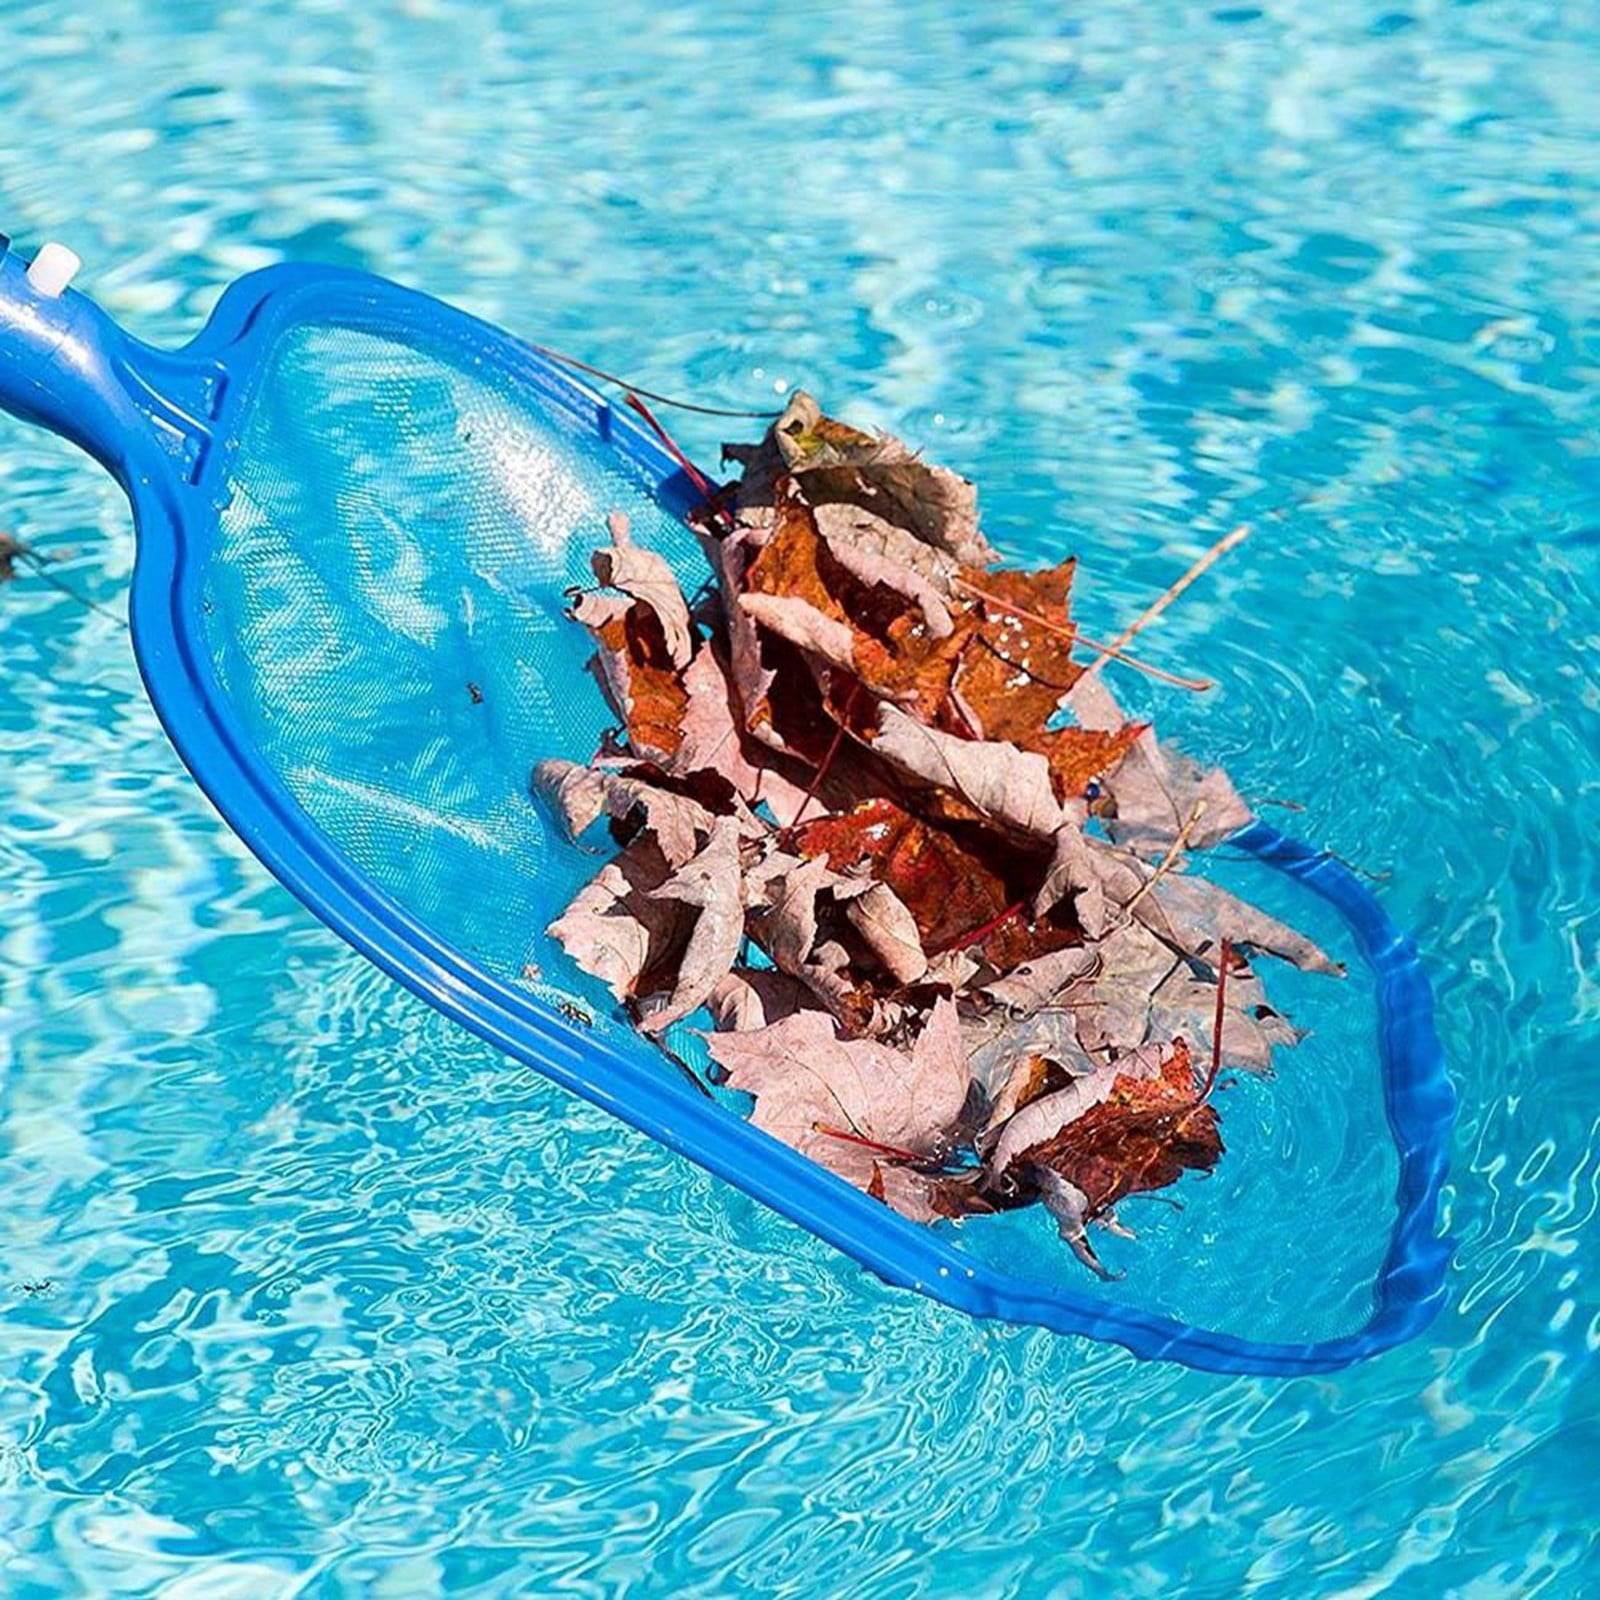 Professional Leaf Rake Mesh Frame Net Skimmer Cleaner Swimming Pool Spa Tool US 